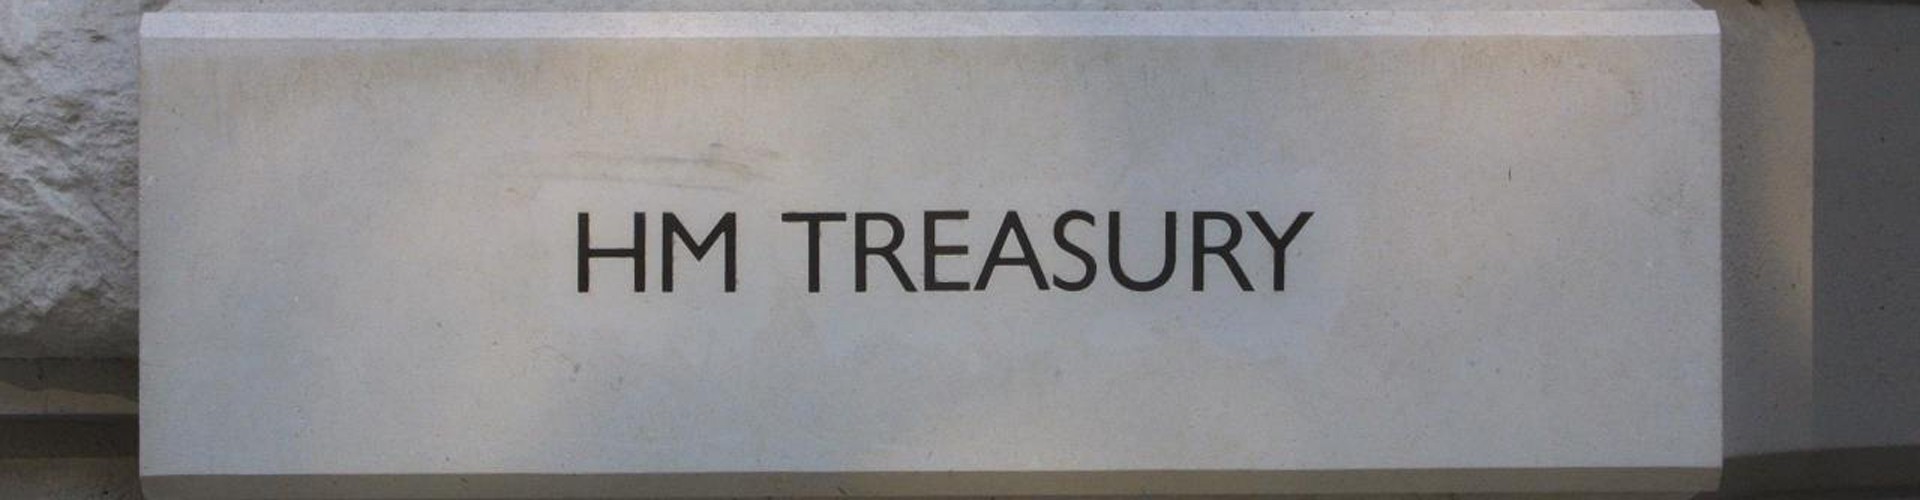 treasury sign